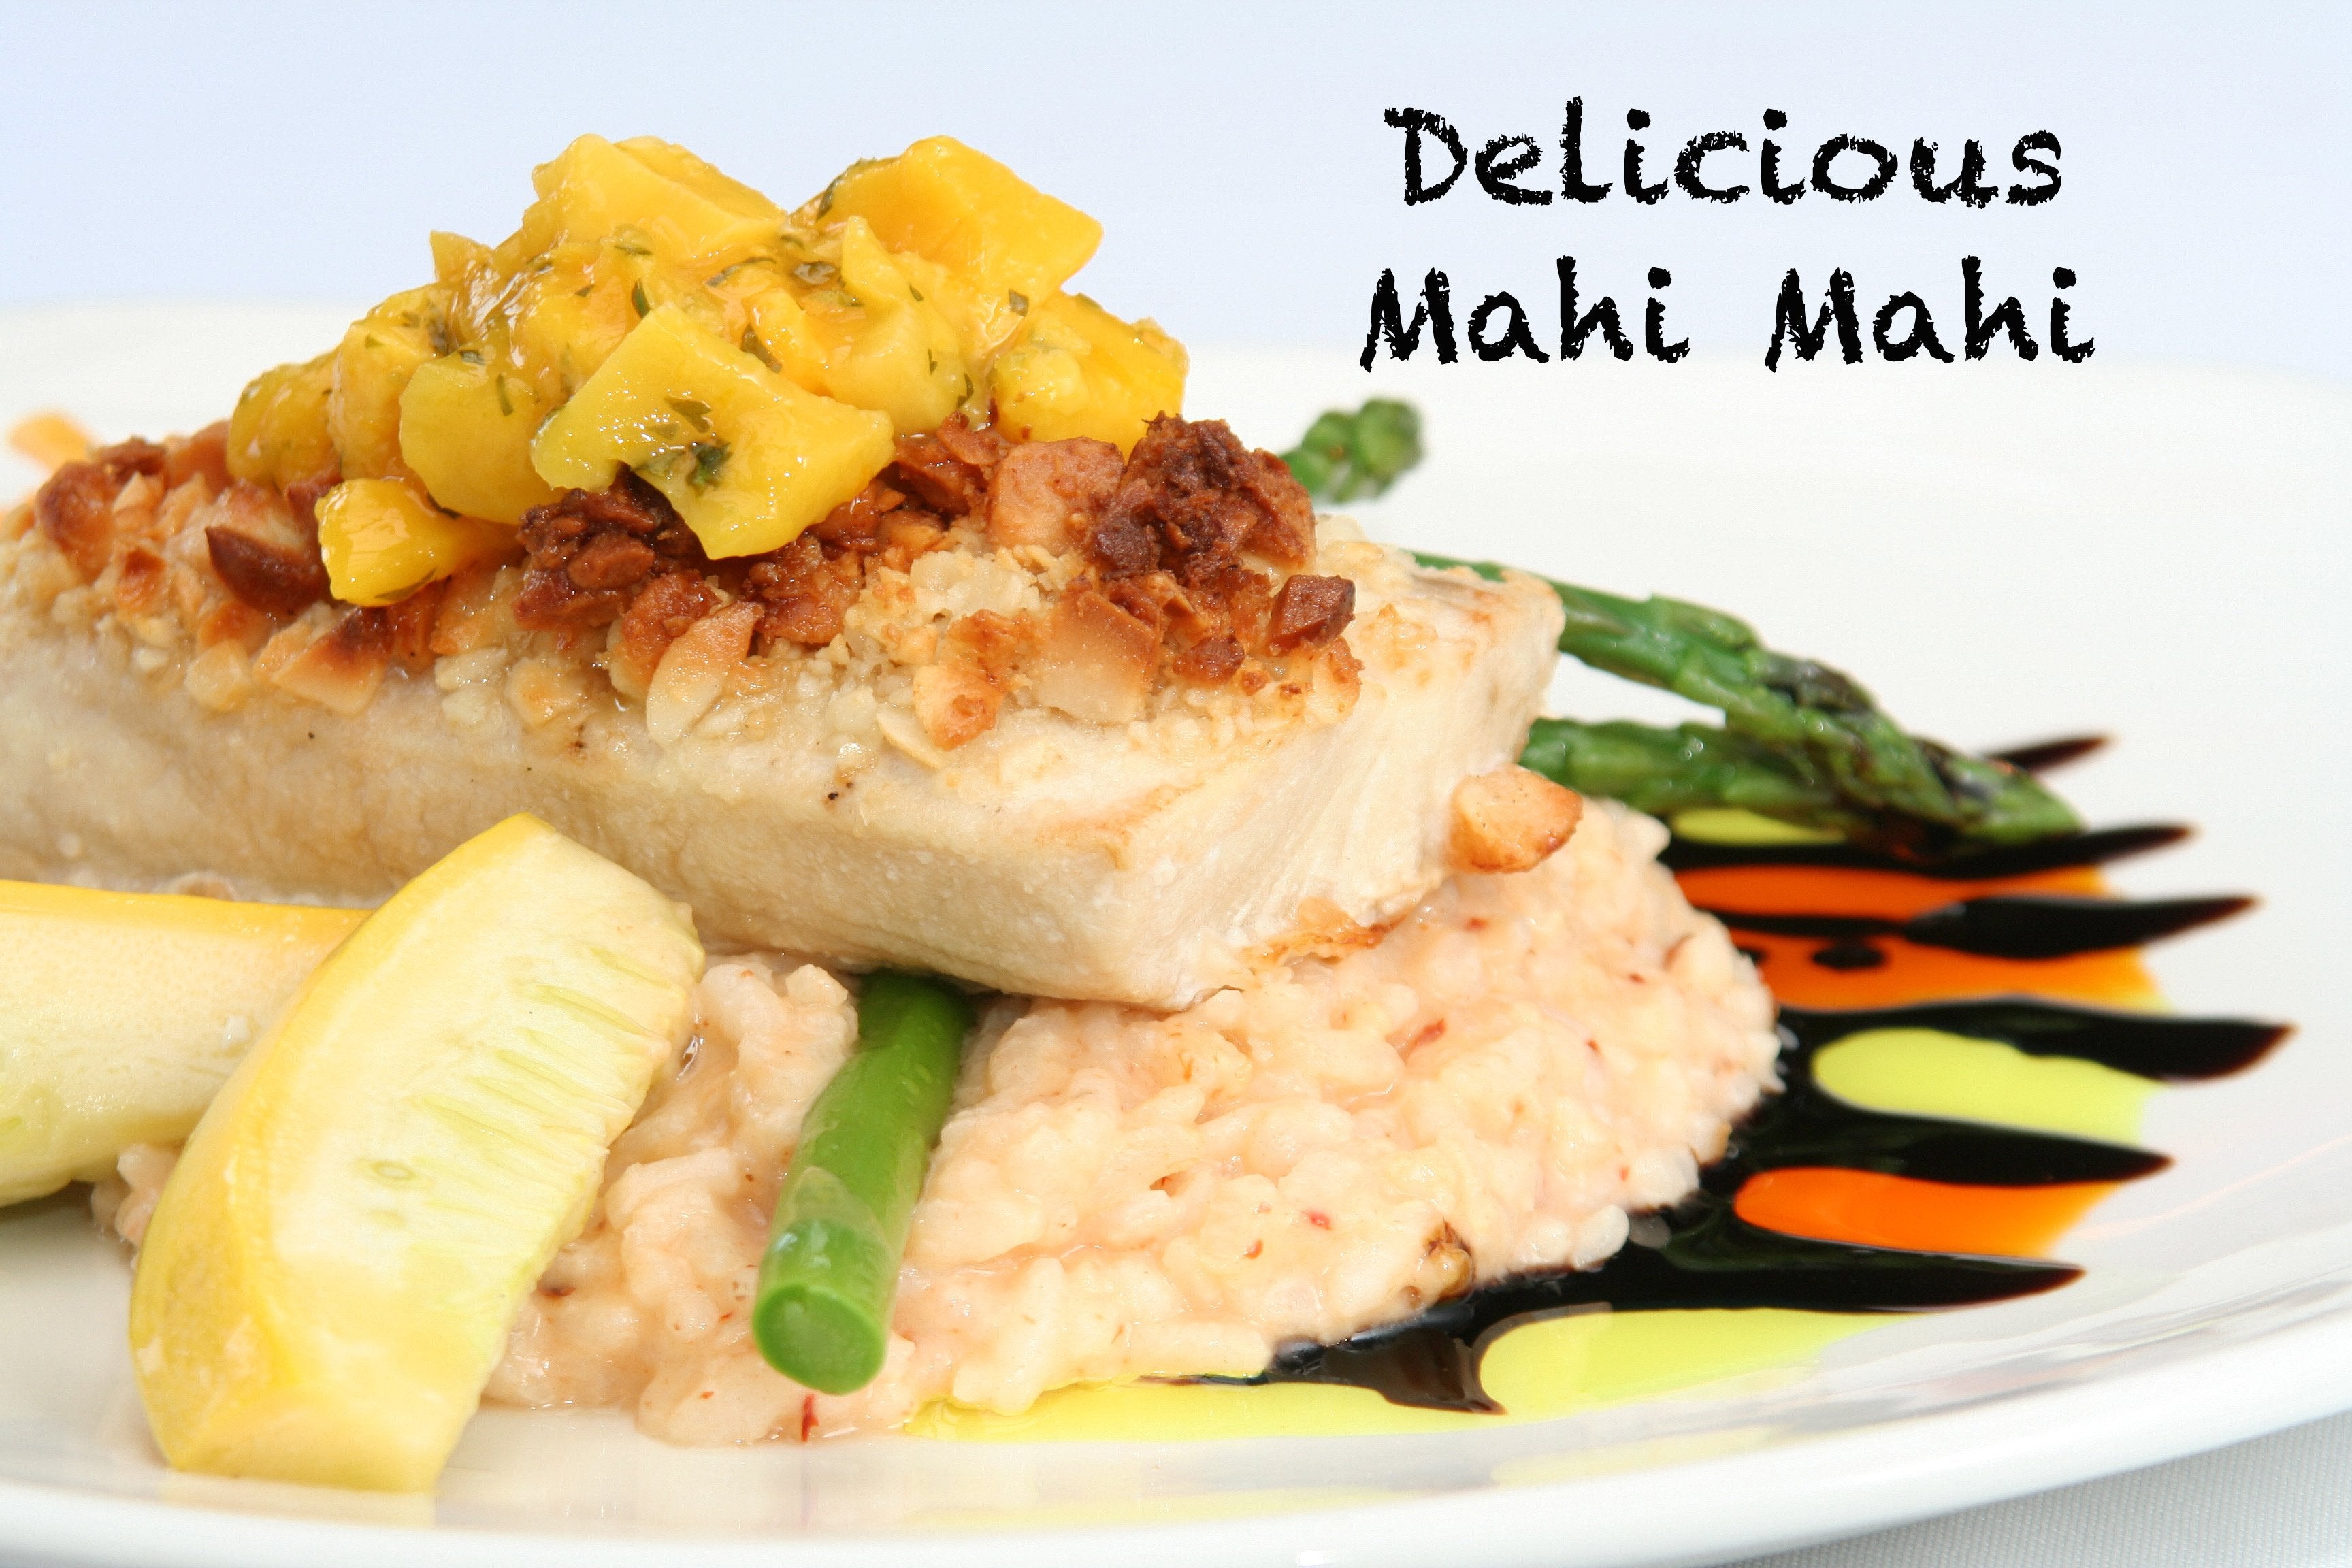 Fish - 2 x 6oz wild-caught Mahi Mahi portions